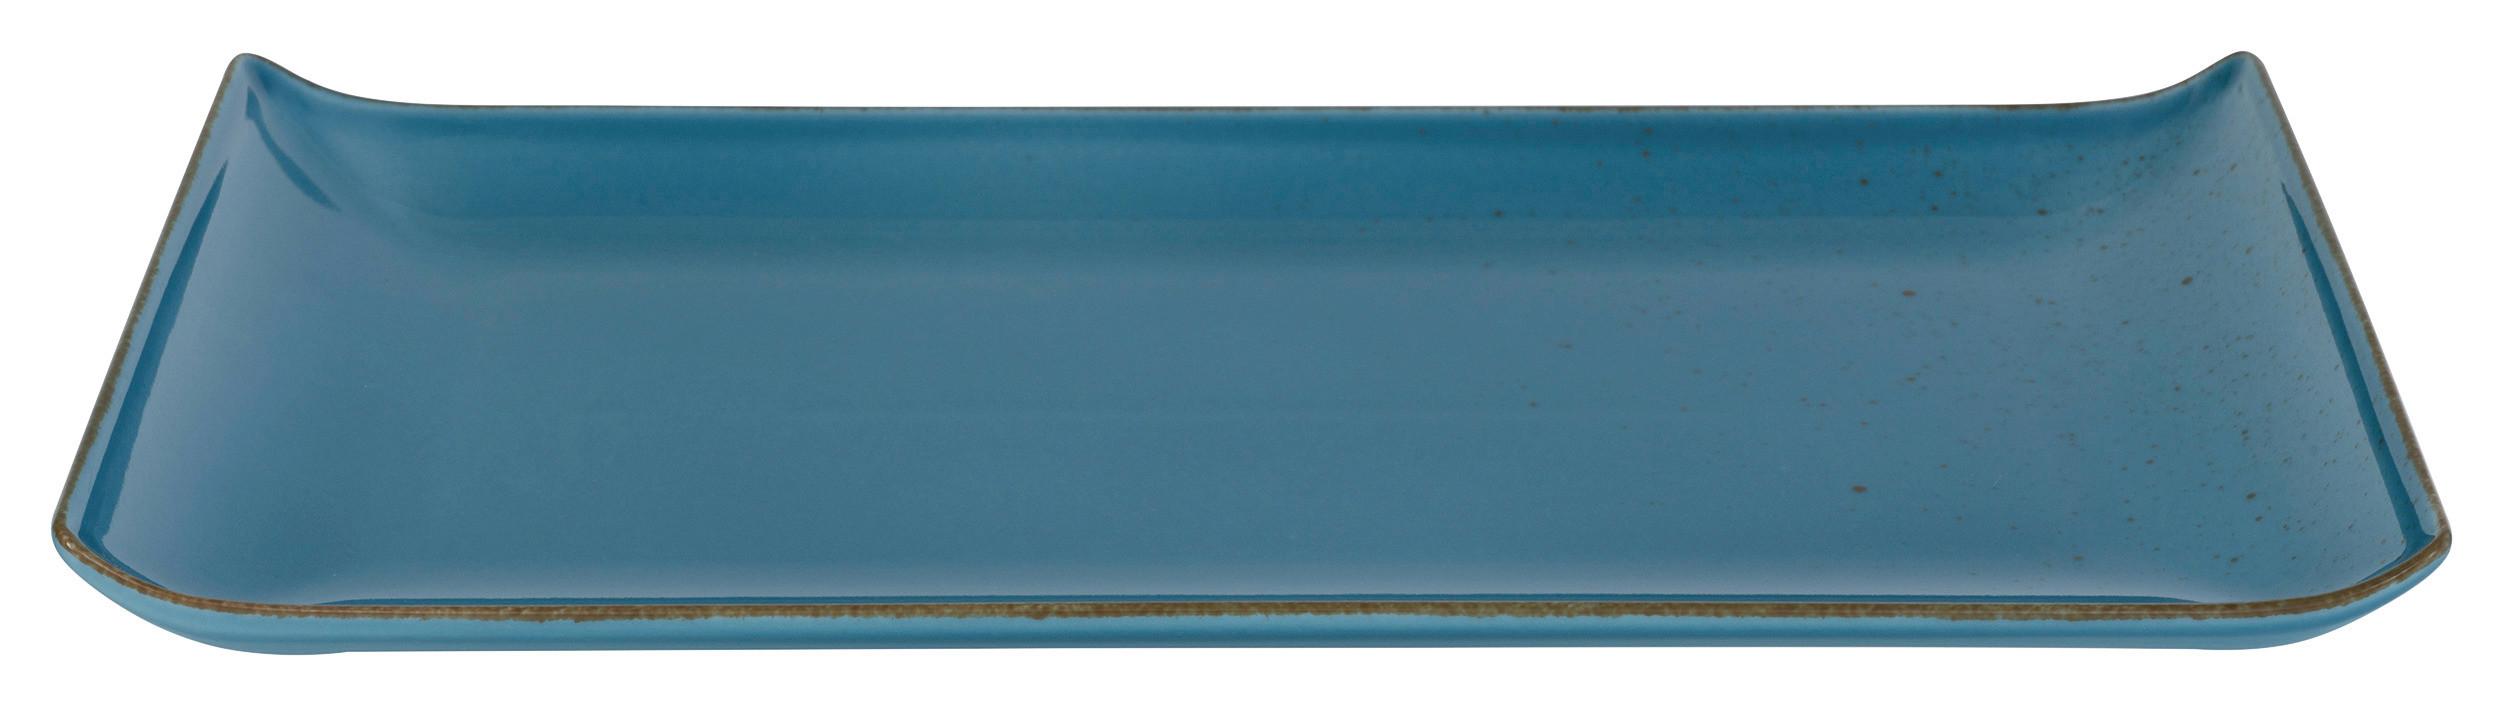 Servierplatte Capri in Blau - Blau, Modern, Keramik (32/16,5/2cm) - Premium Living